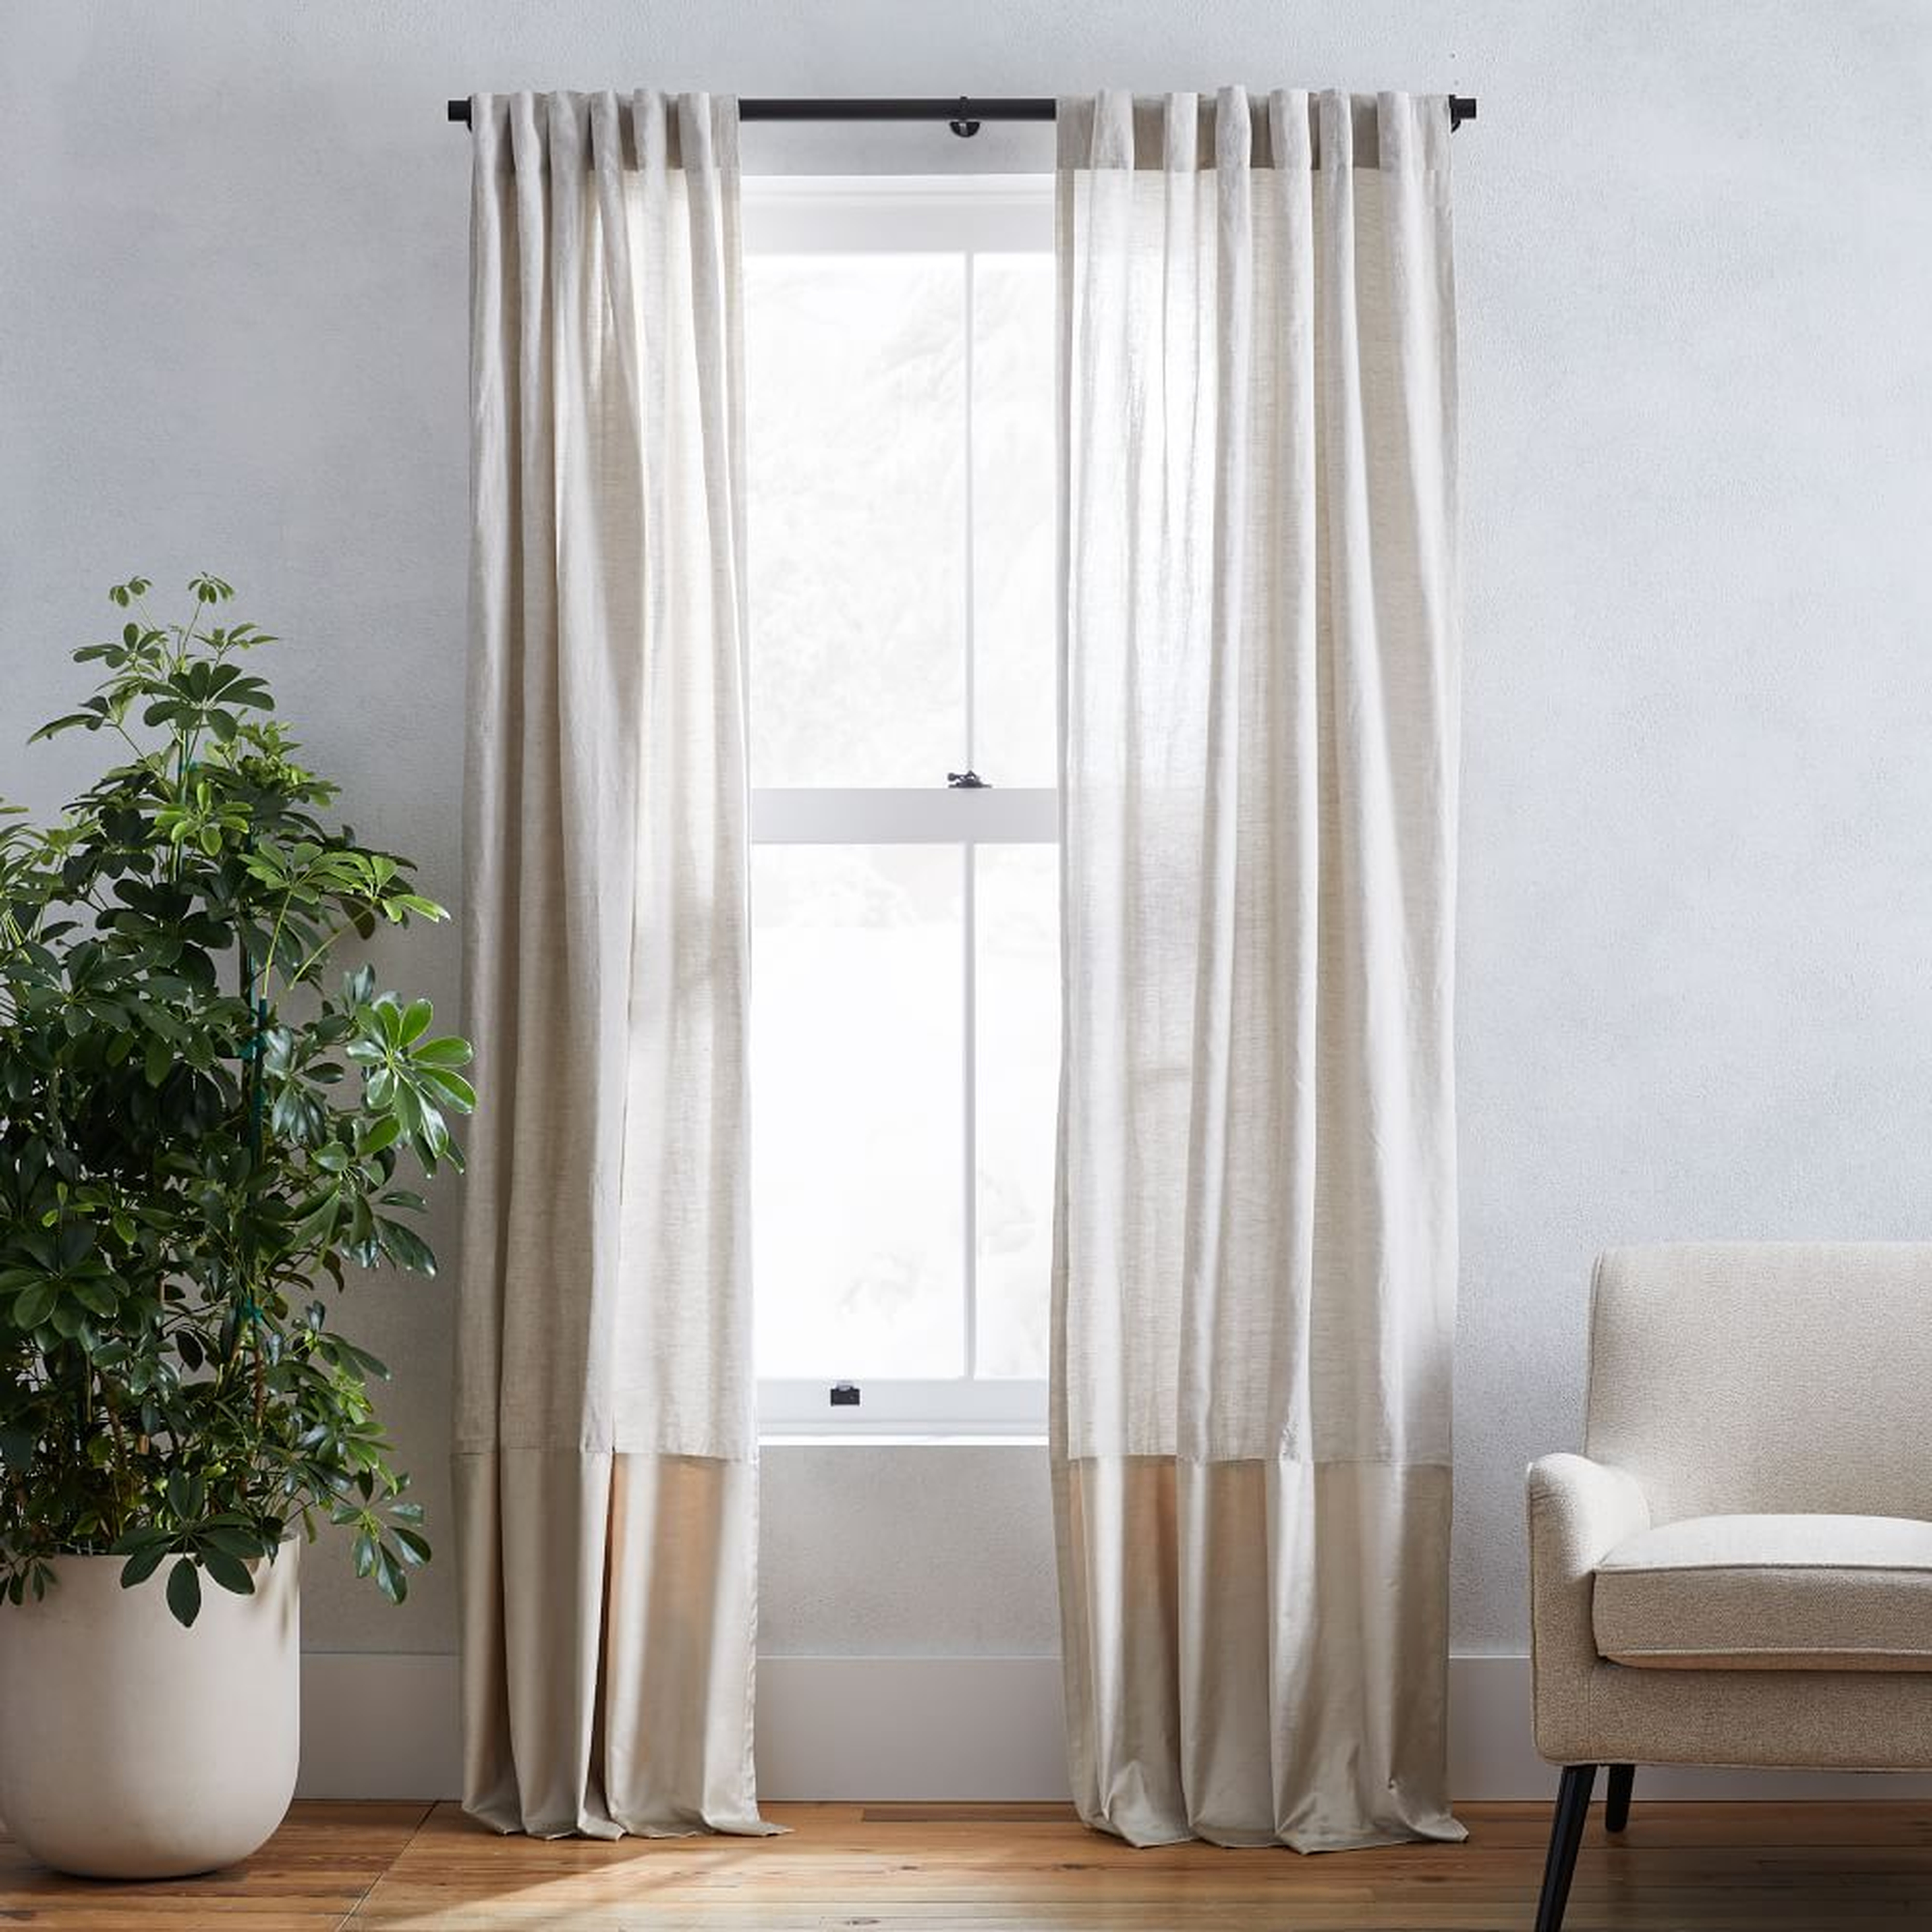 European Flax Linen + Luster Velvet Curtain, Natural/Sand 48"x96" - West Elm